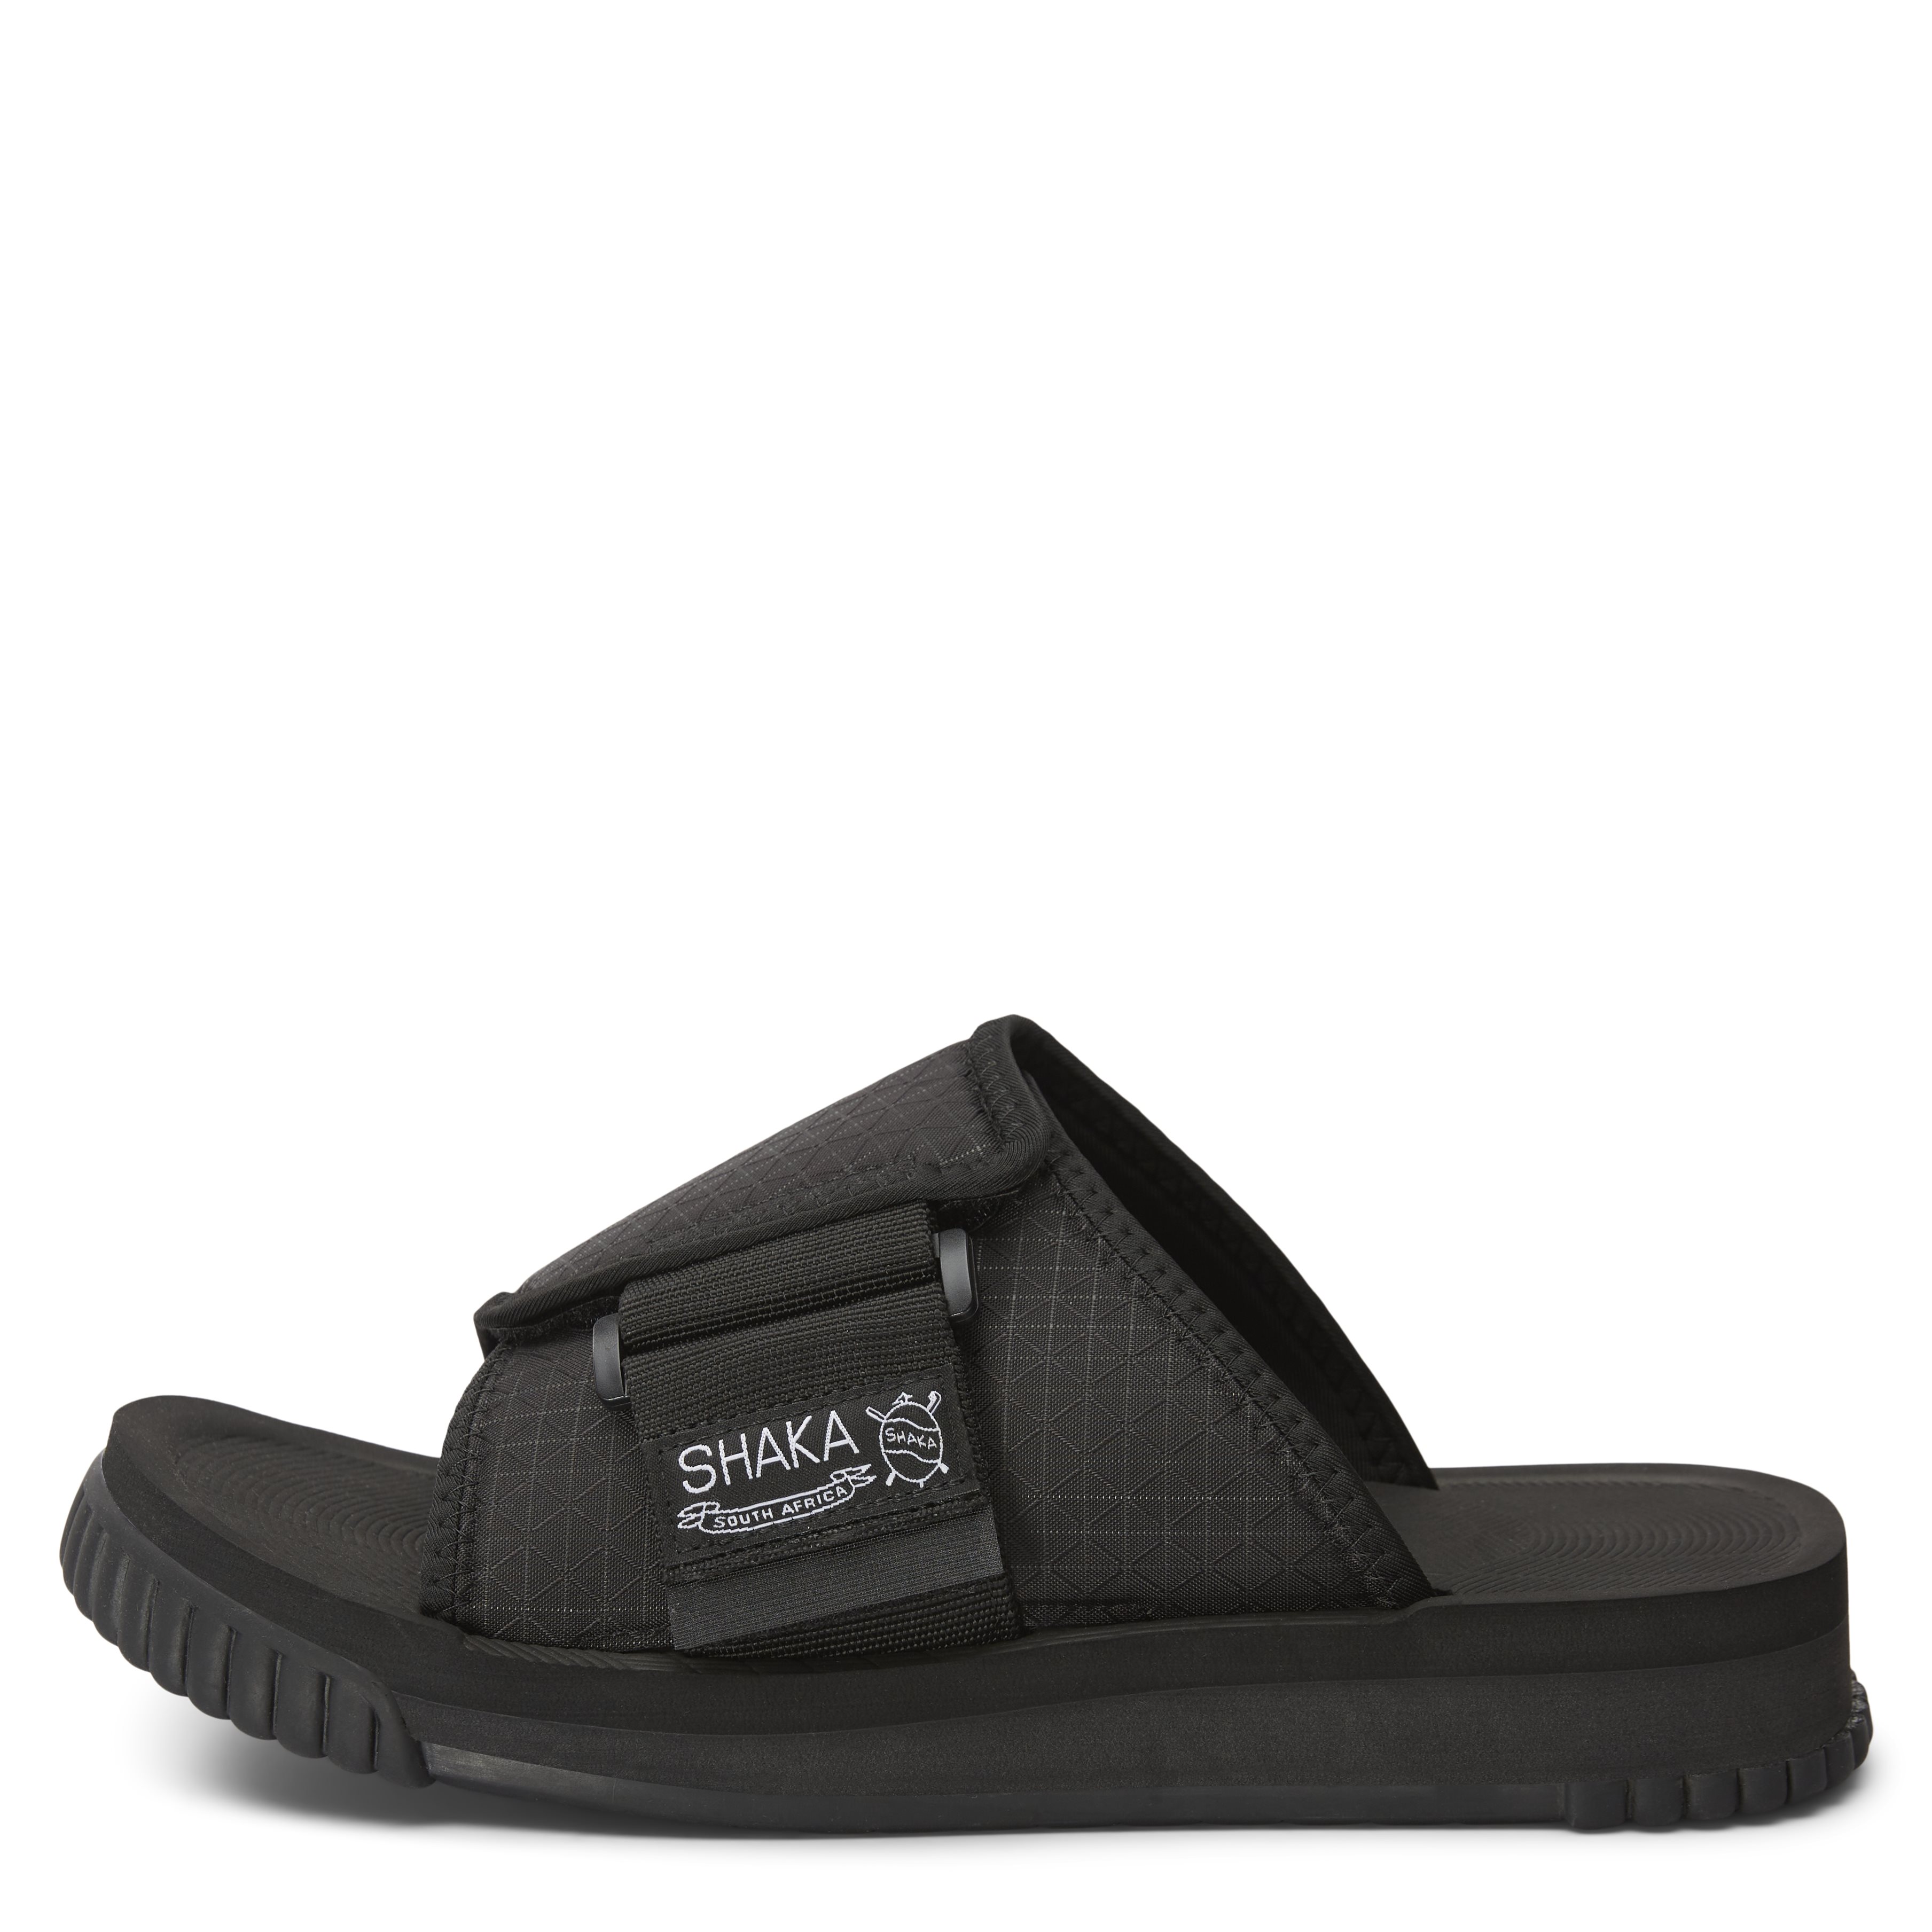 SHAKA Shoes X-PACKER SPECTRA Black